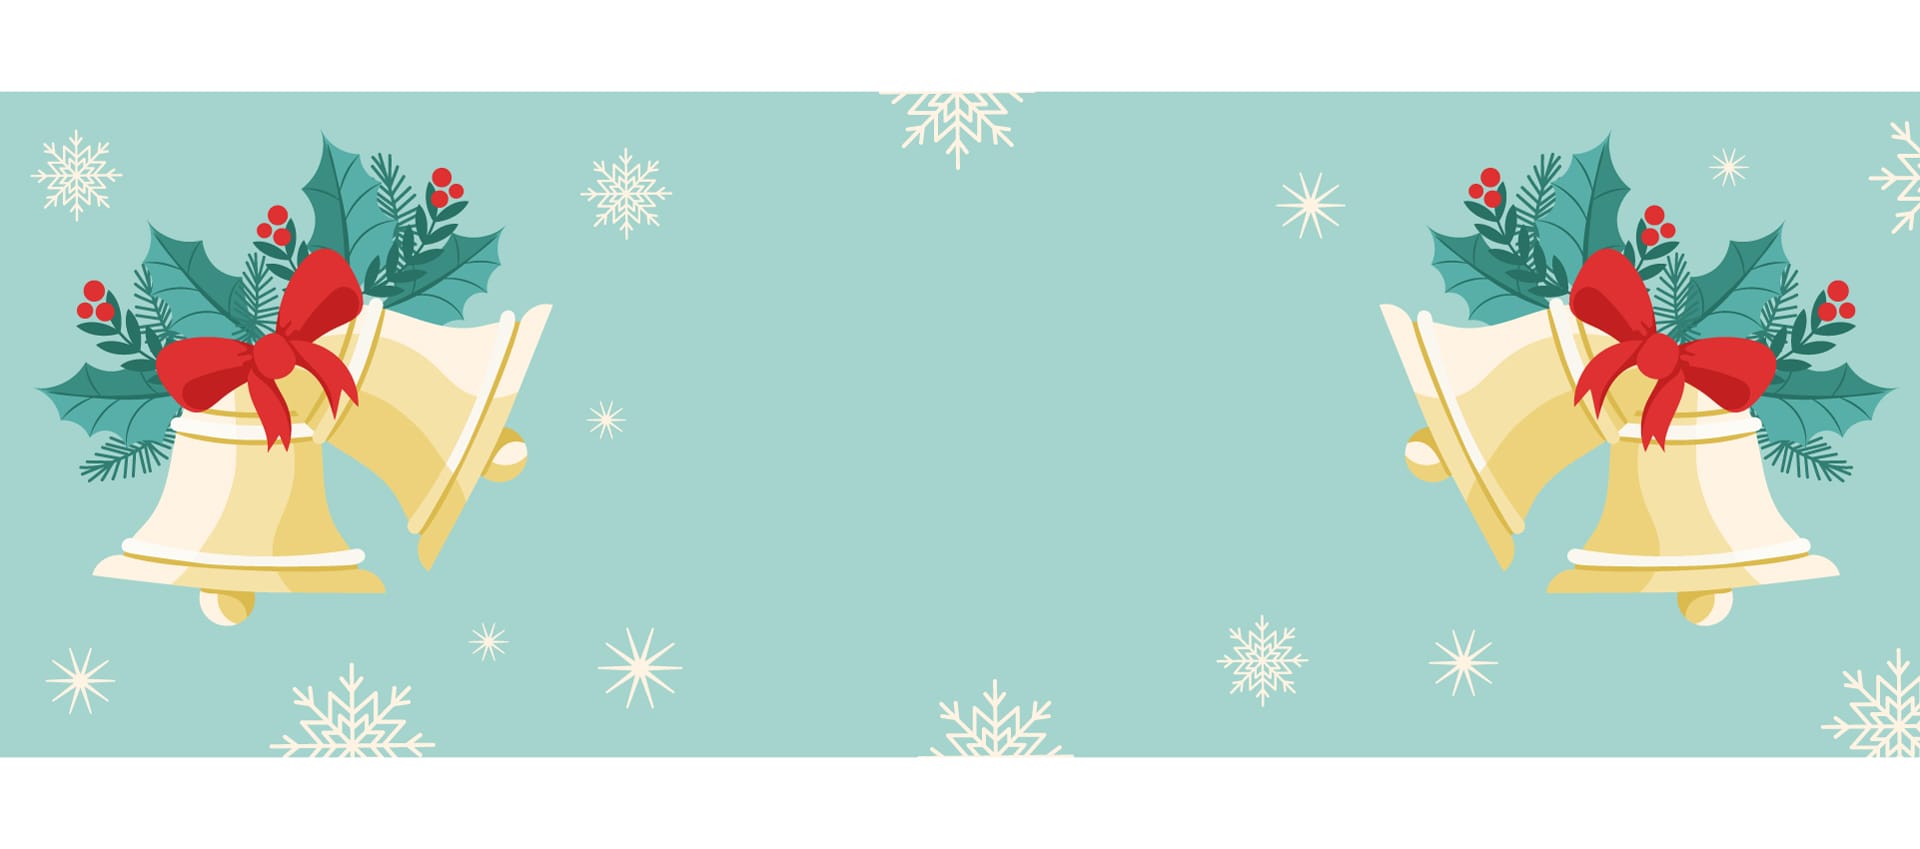 Christmas season celebration horizontal banner template image